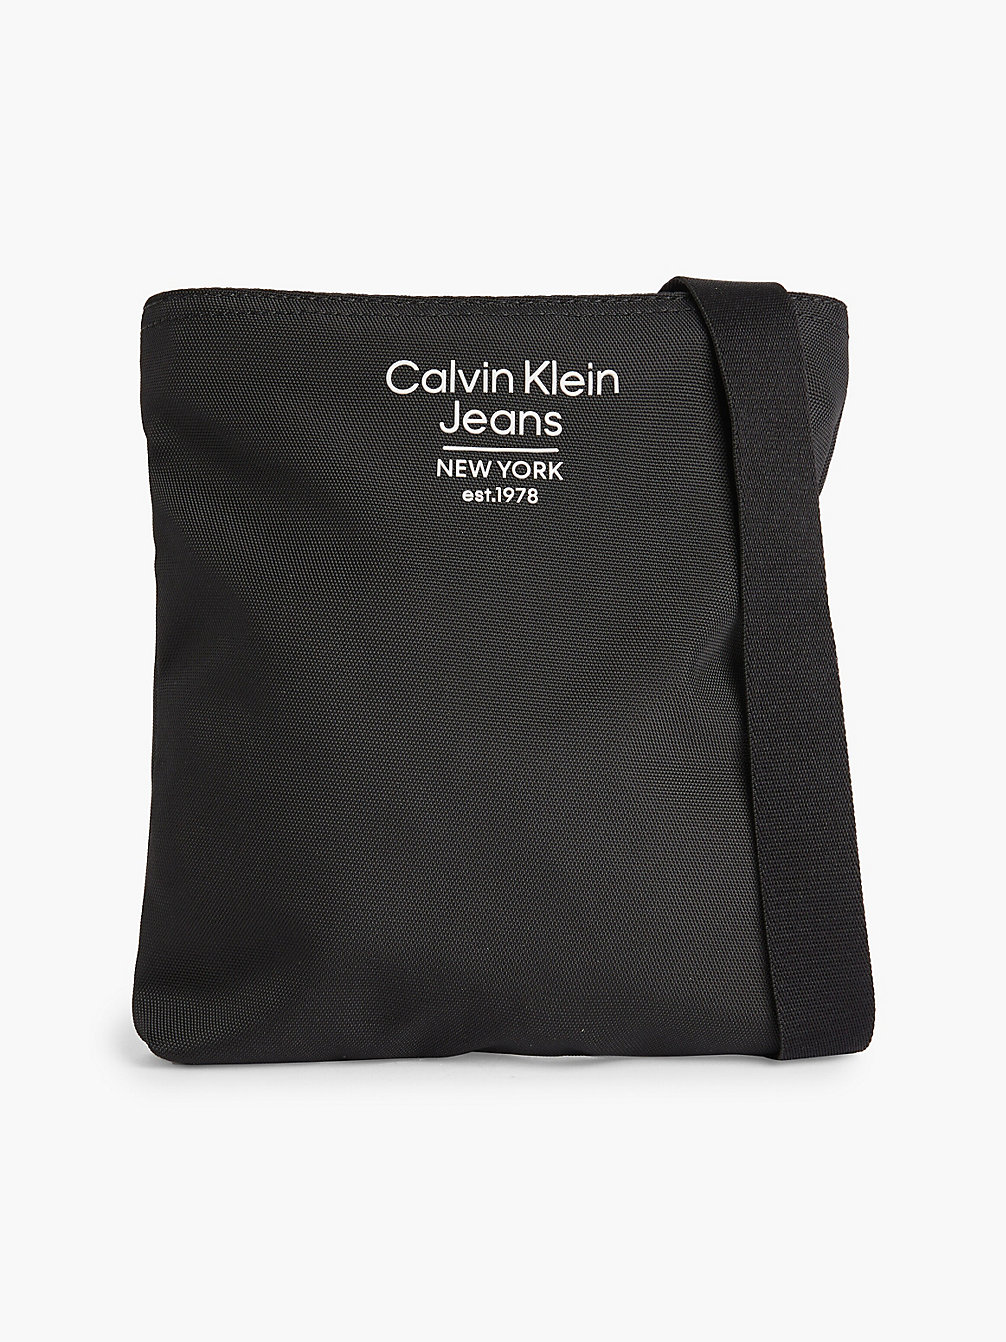 BLACK Flache Crossbody Bag Aus Recyceltem Material undefined Herren Calvin Klein